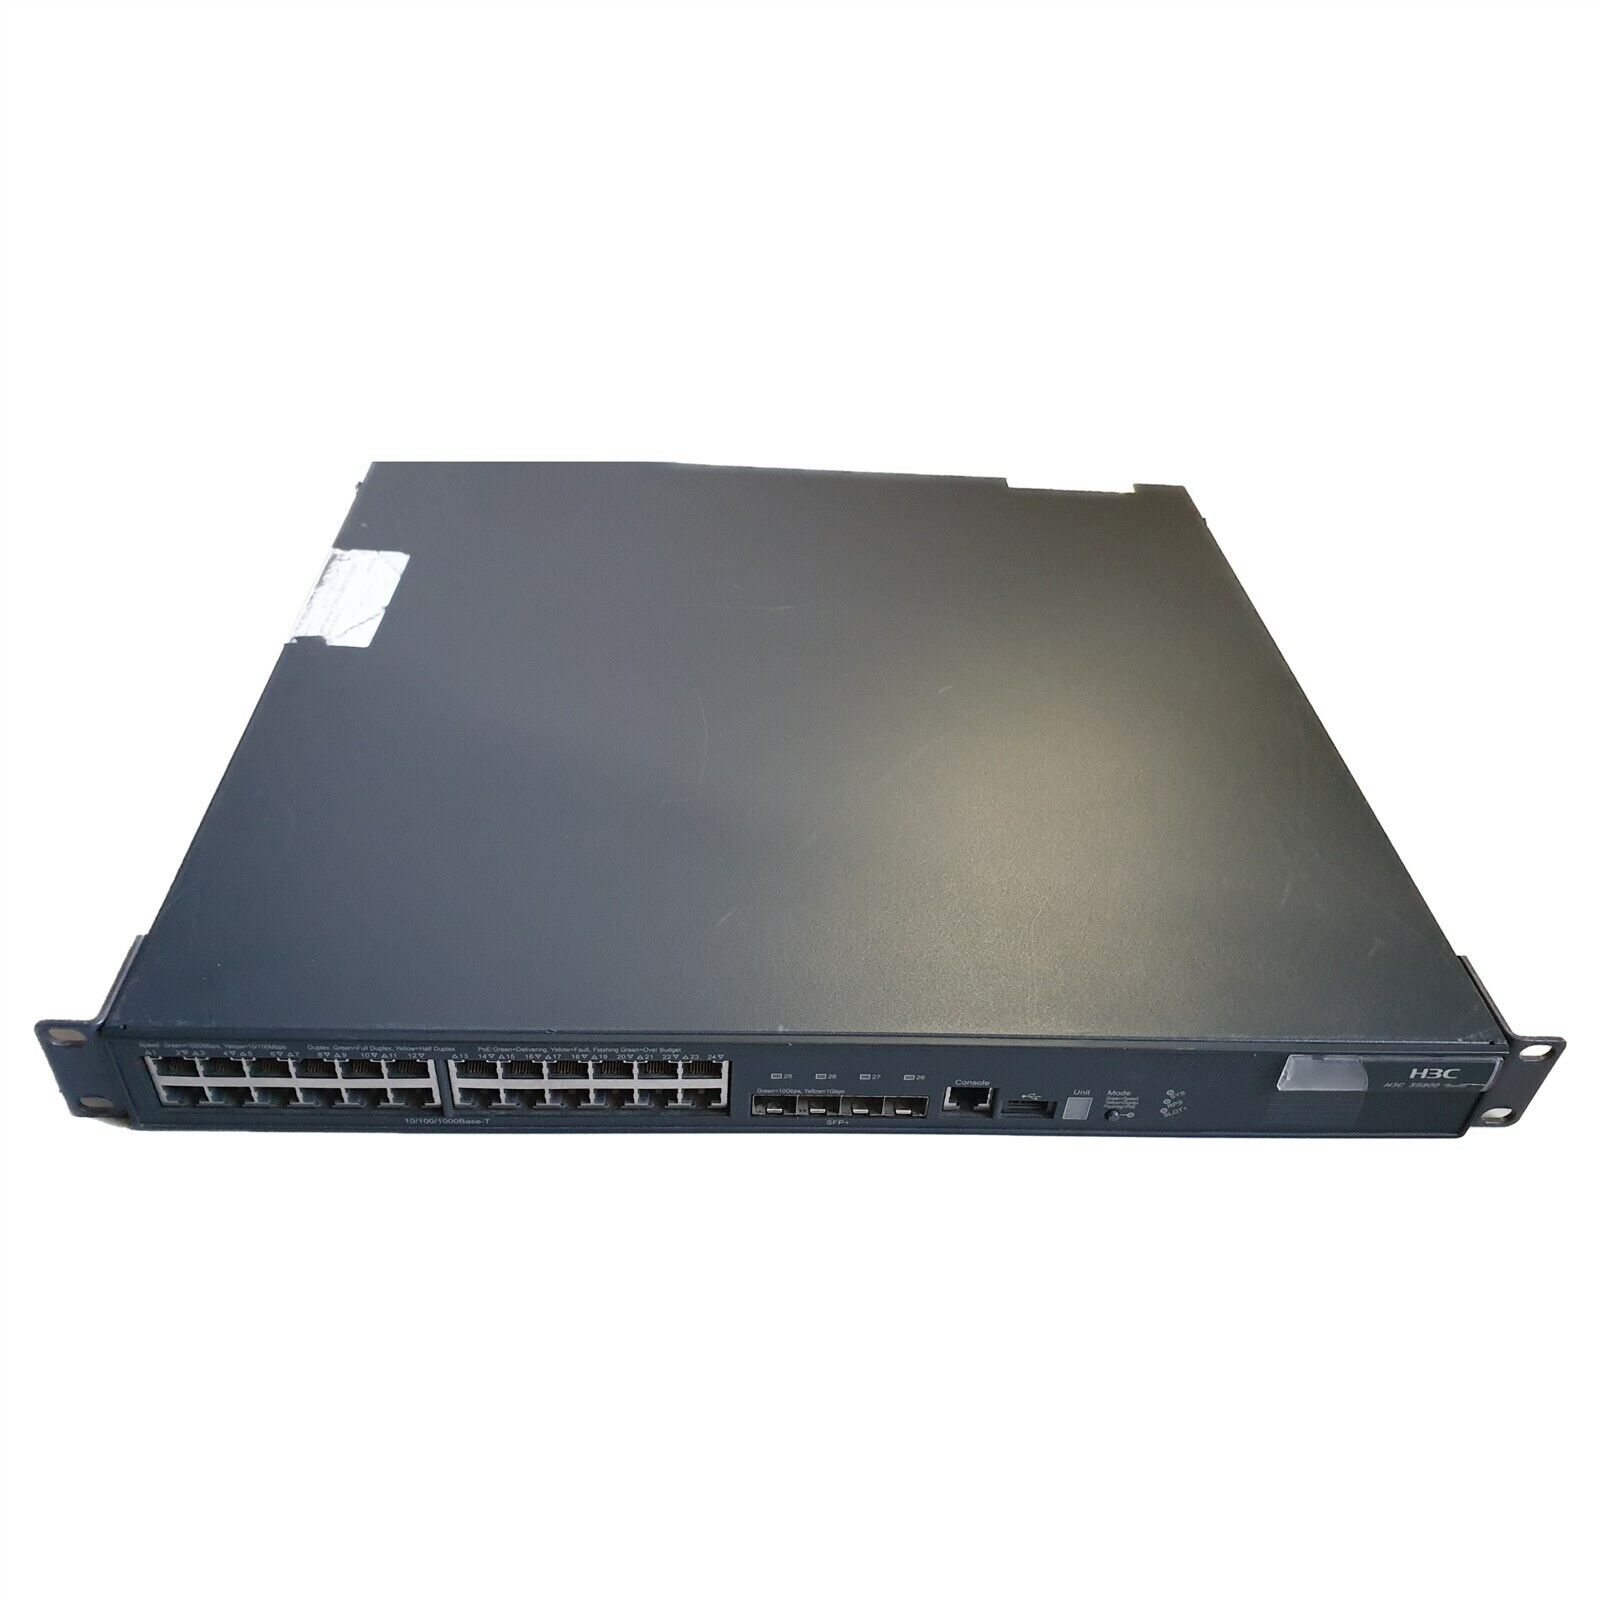 H3C S5800-32C-PWR S5800 Series 24-Port Managed Gigabit Ethernet Switch LSW1SP4P0